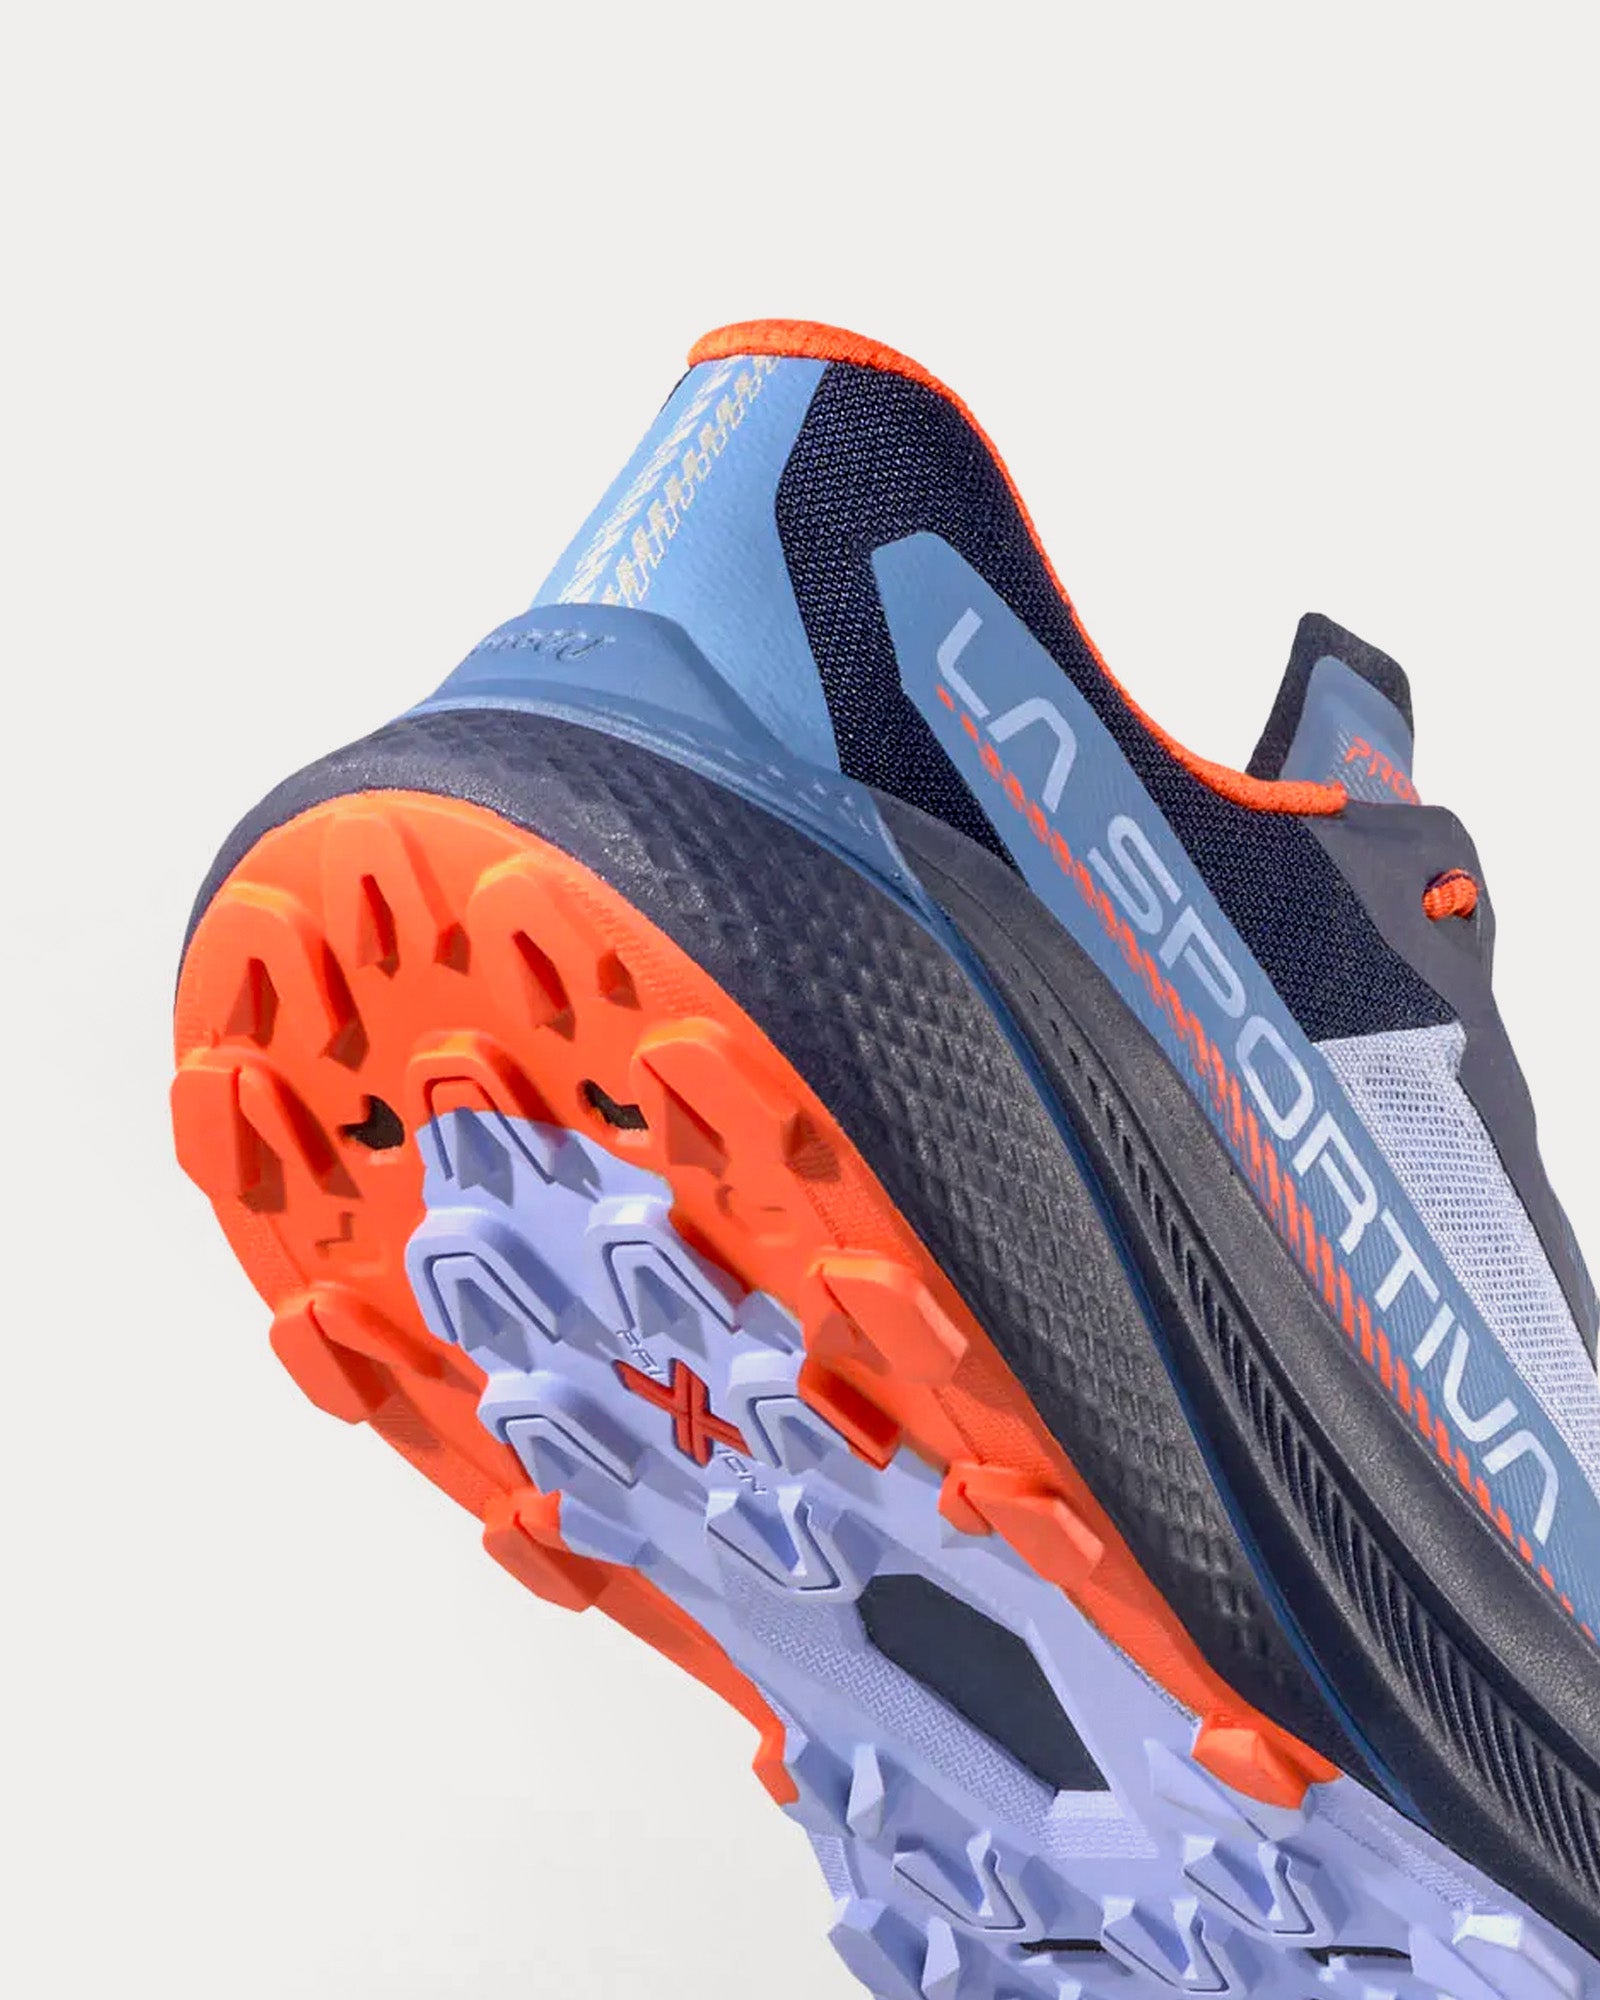 La Sportiva - Prodigio Stone Blue / Midnight Running Shoes